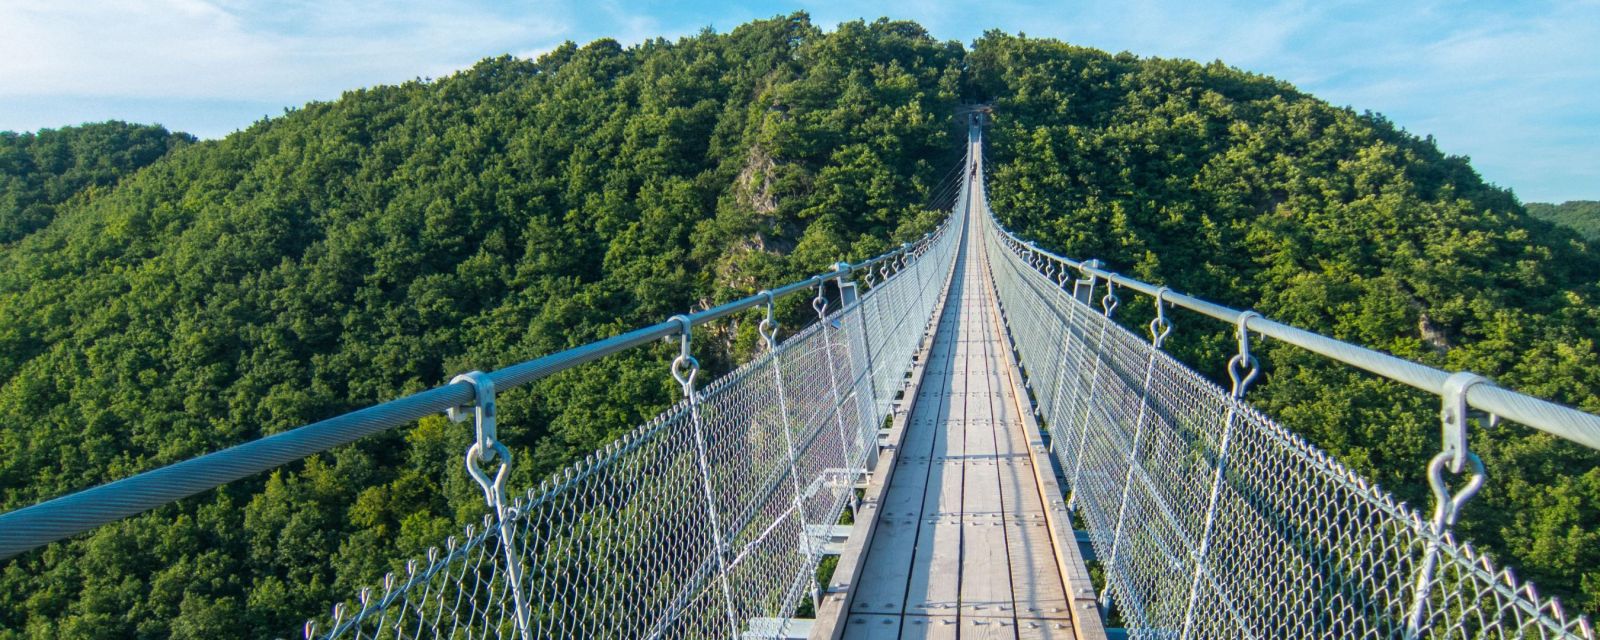 Geierlay - Suspension Bridge - 5 Tips